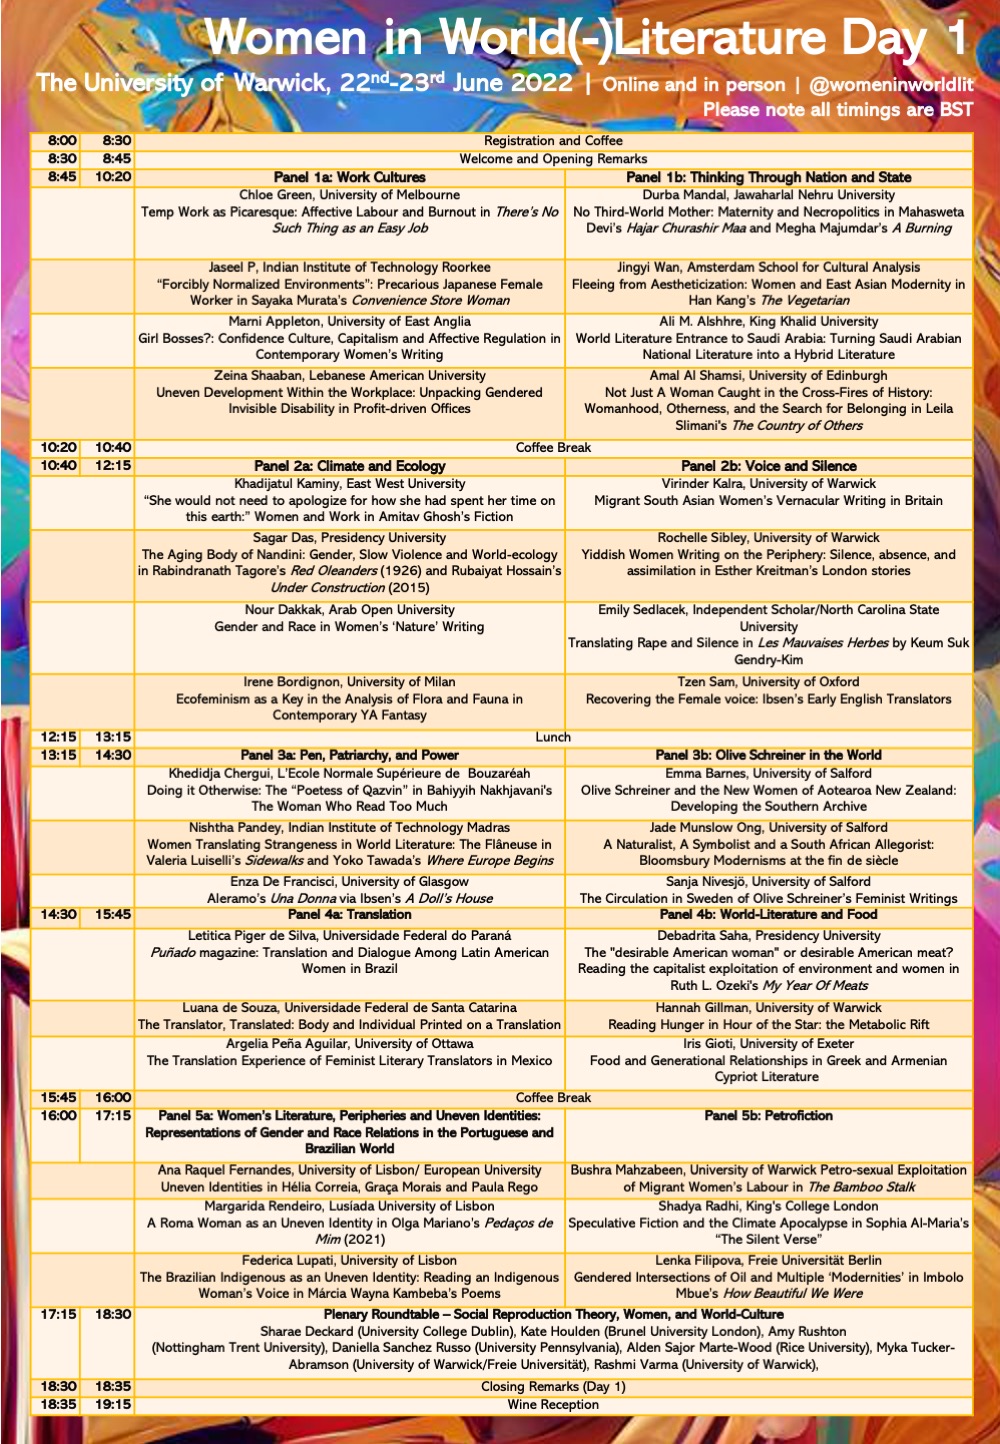 Schedule for Women in World(-)Literature conference. Plain text version below.